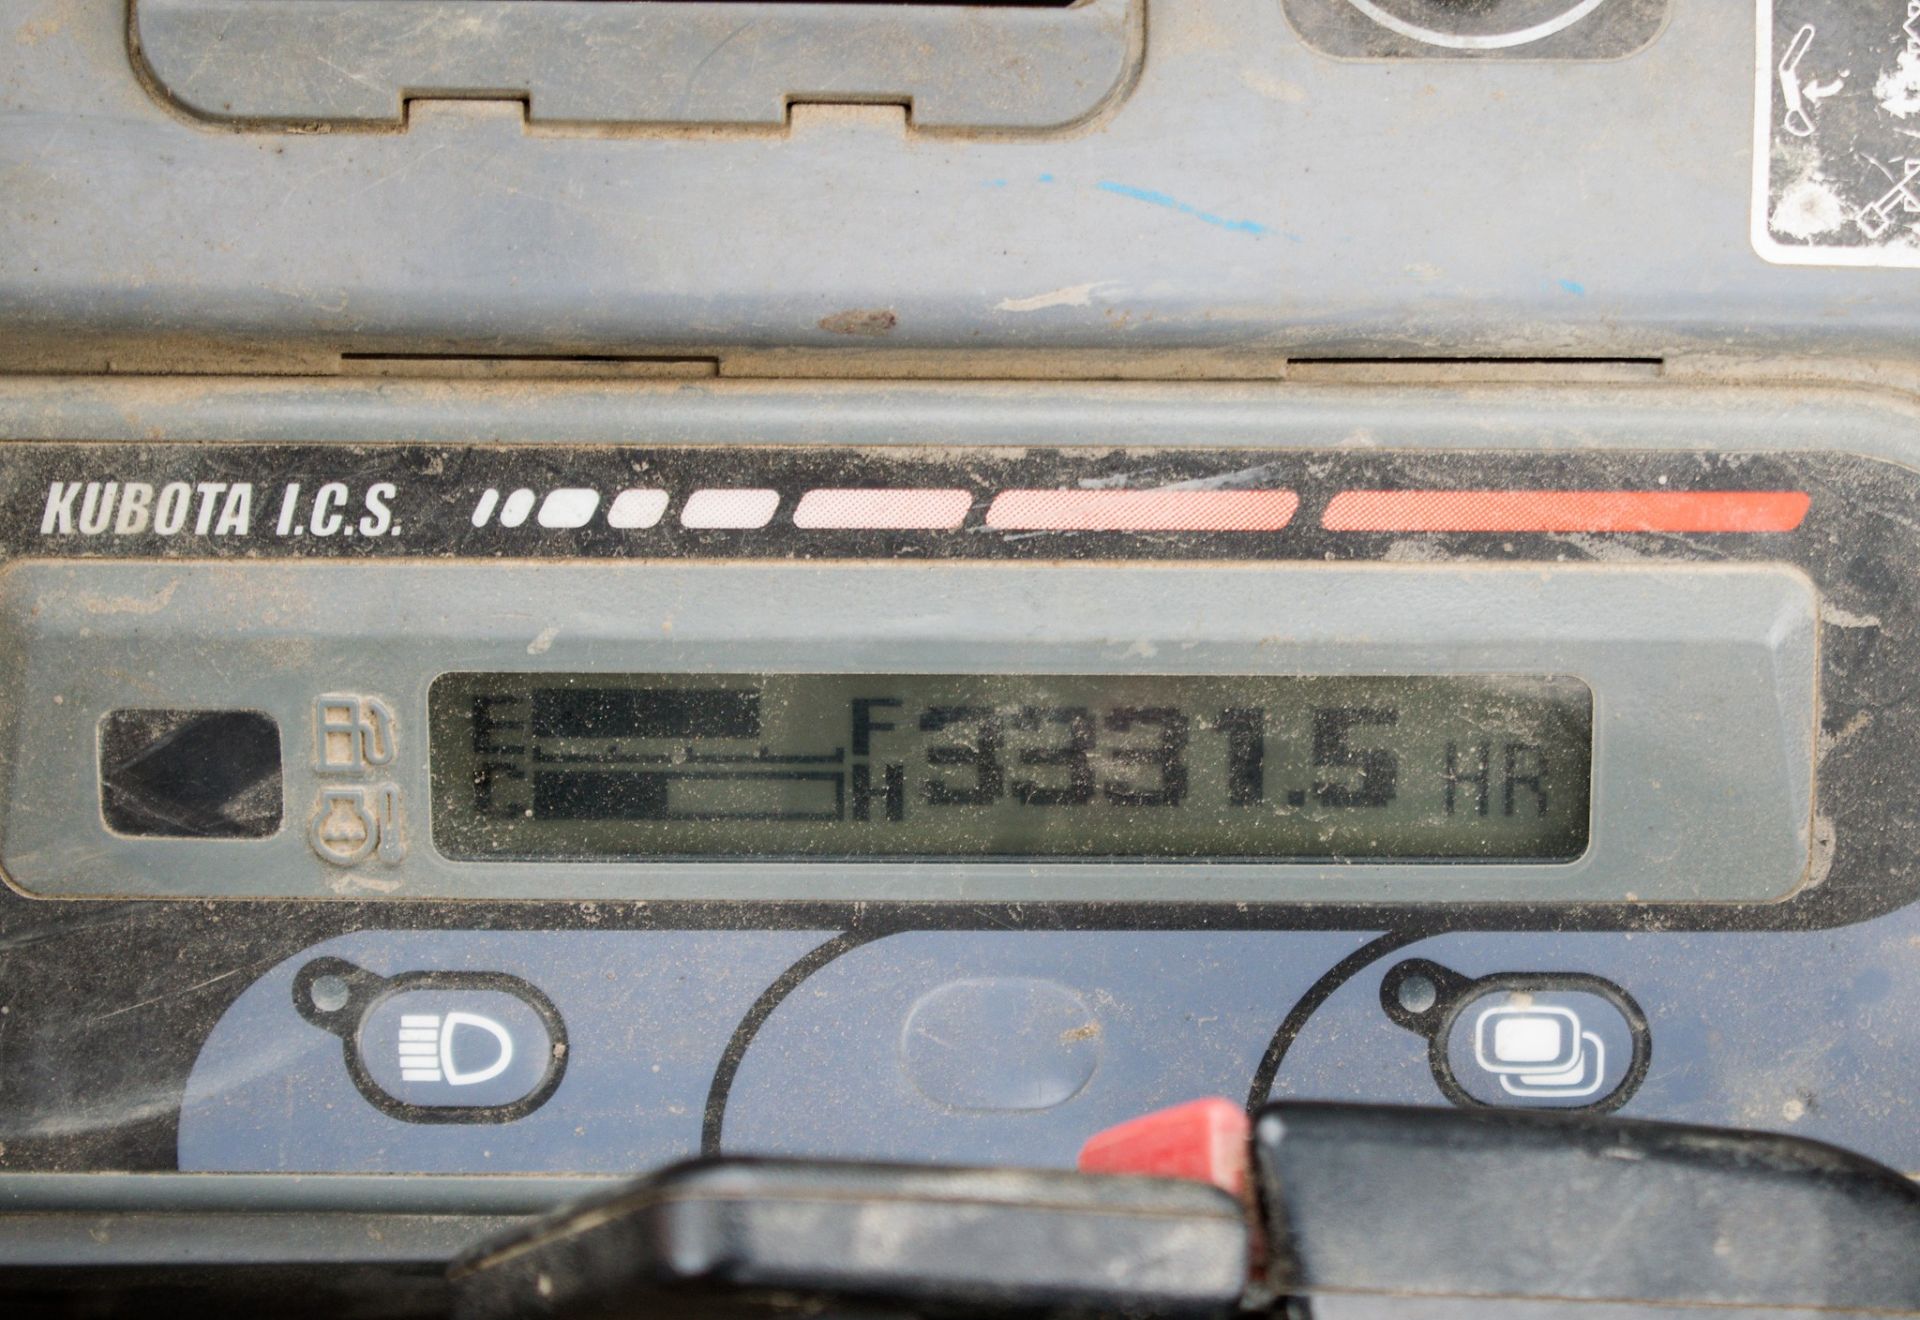 Kubota KX61-3 2.6 tonne rubber tracked mini excavator Year: 2012 S/N: 79169 Recorded Hours: 3331 - Image 23 of 25